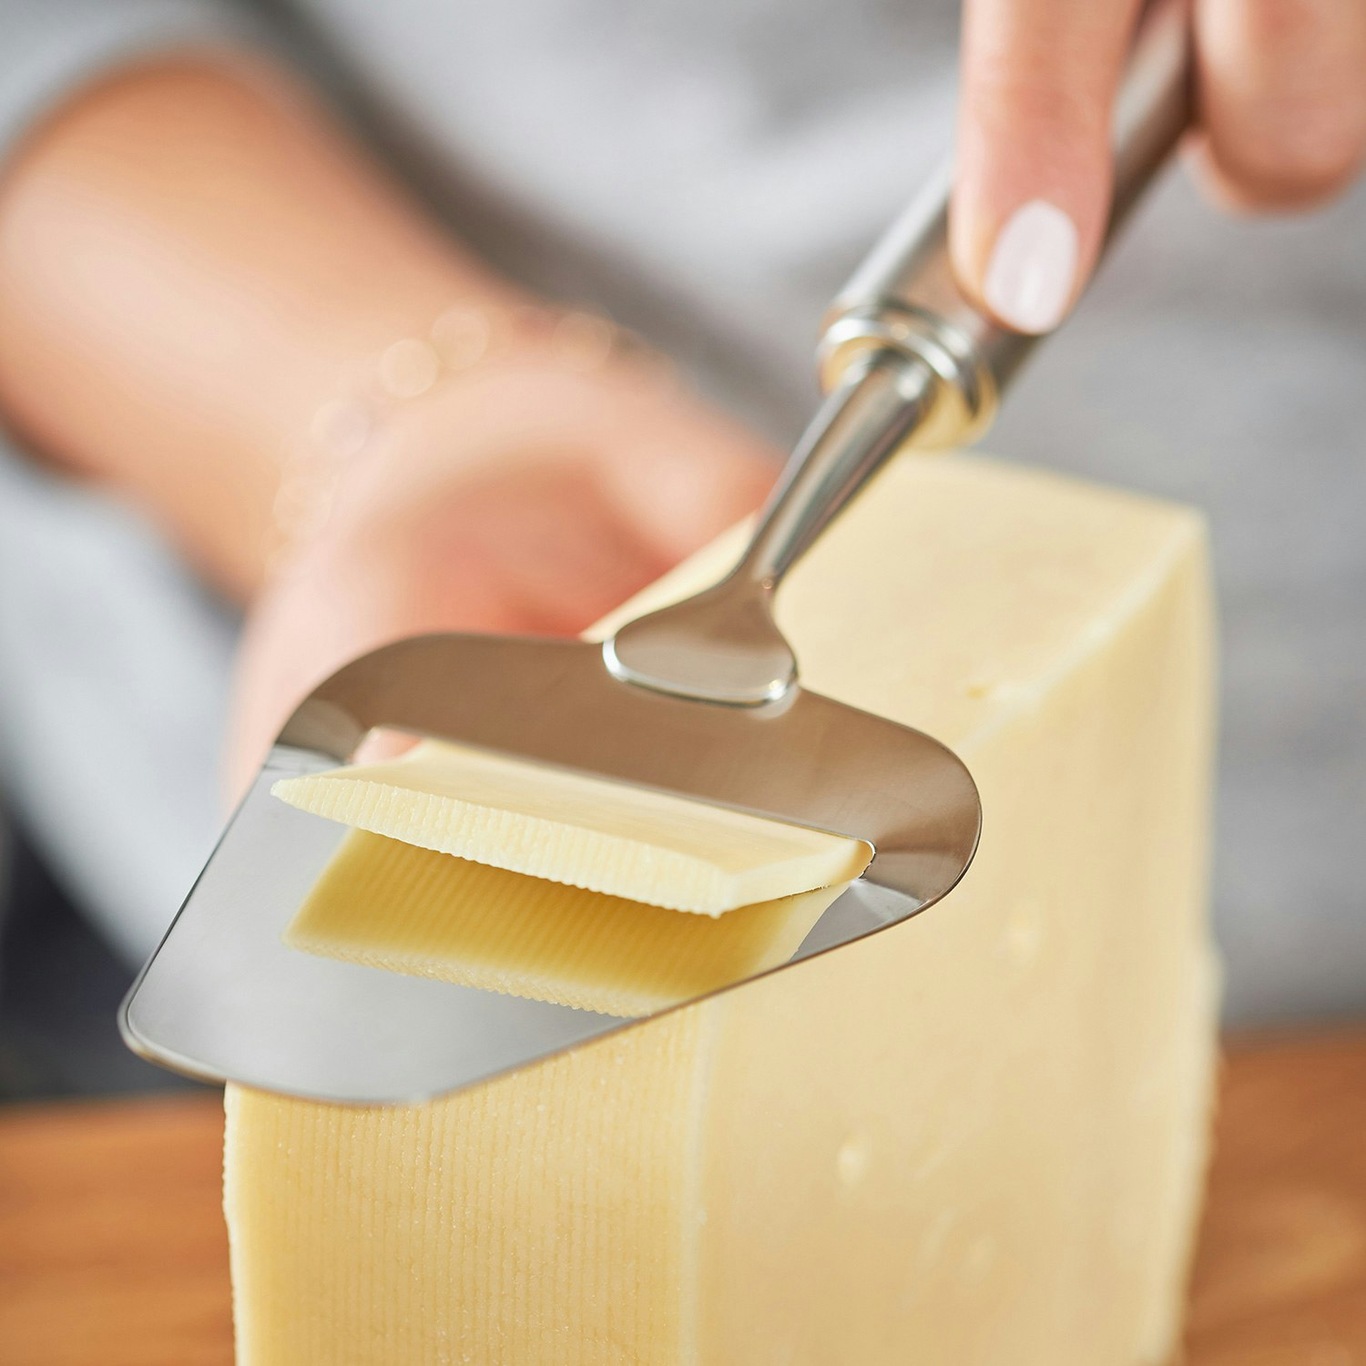 https://royaldesign.com/image/2/rosle-cheese-slicer-stainless-steel-24-cm-1?w=800&quality=80